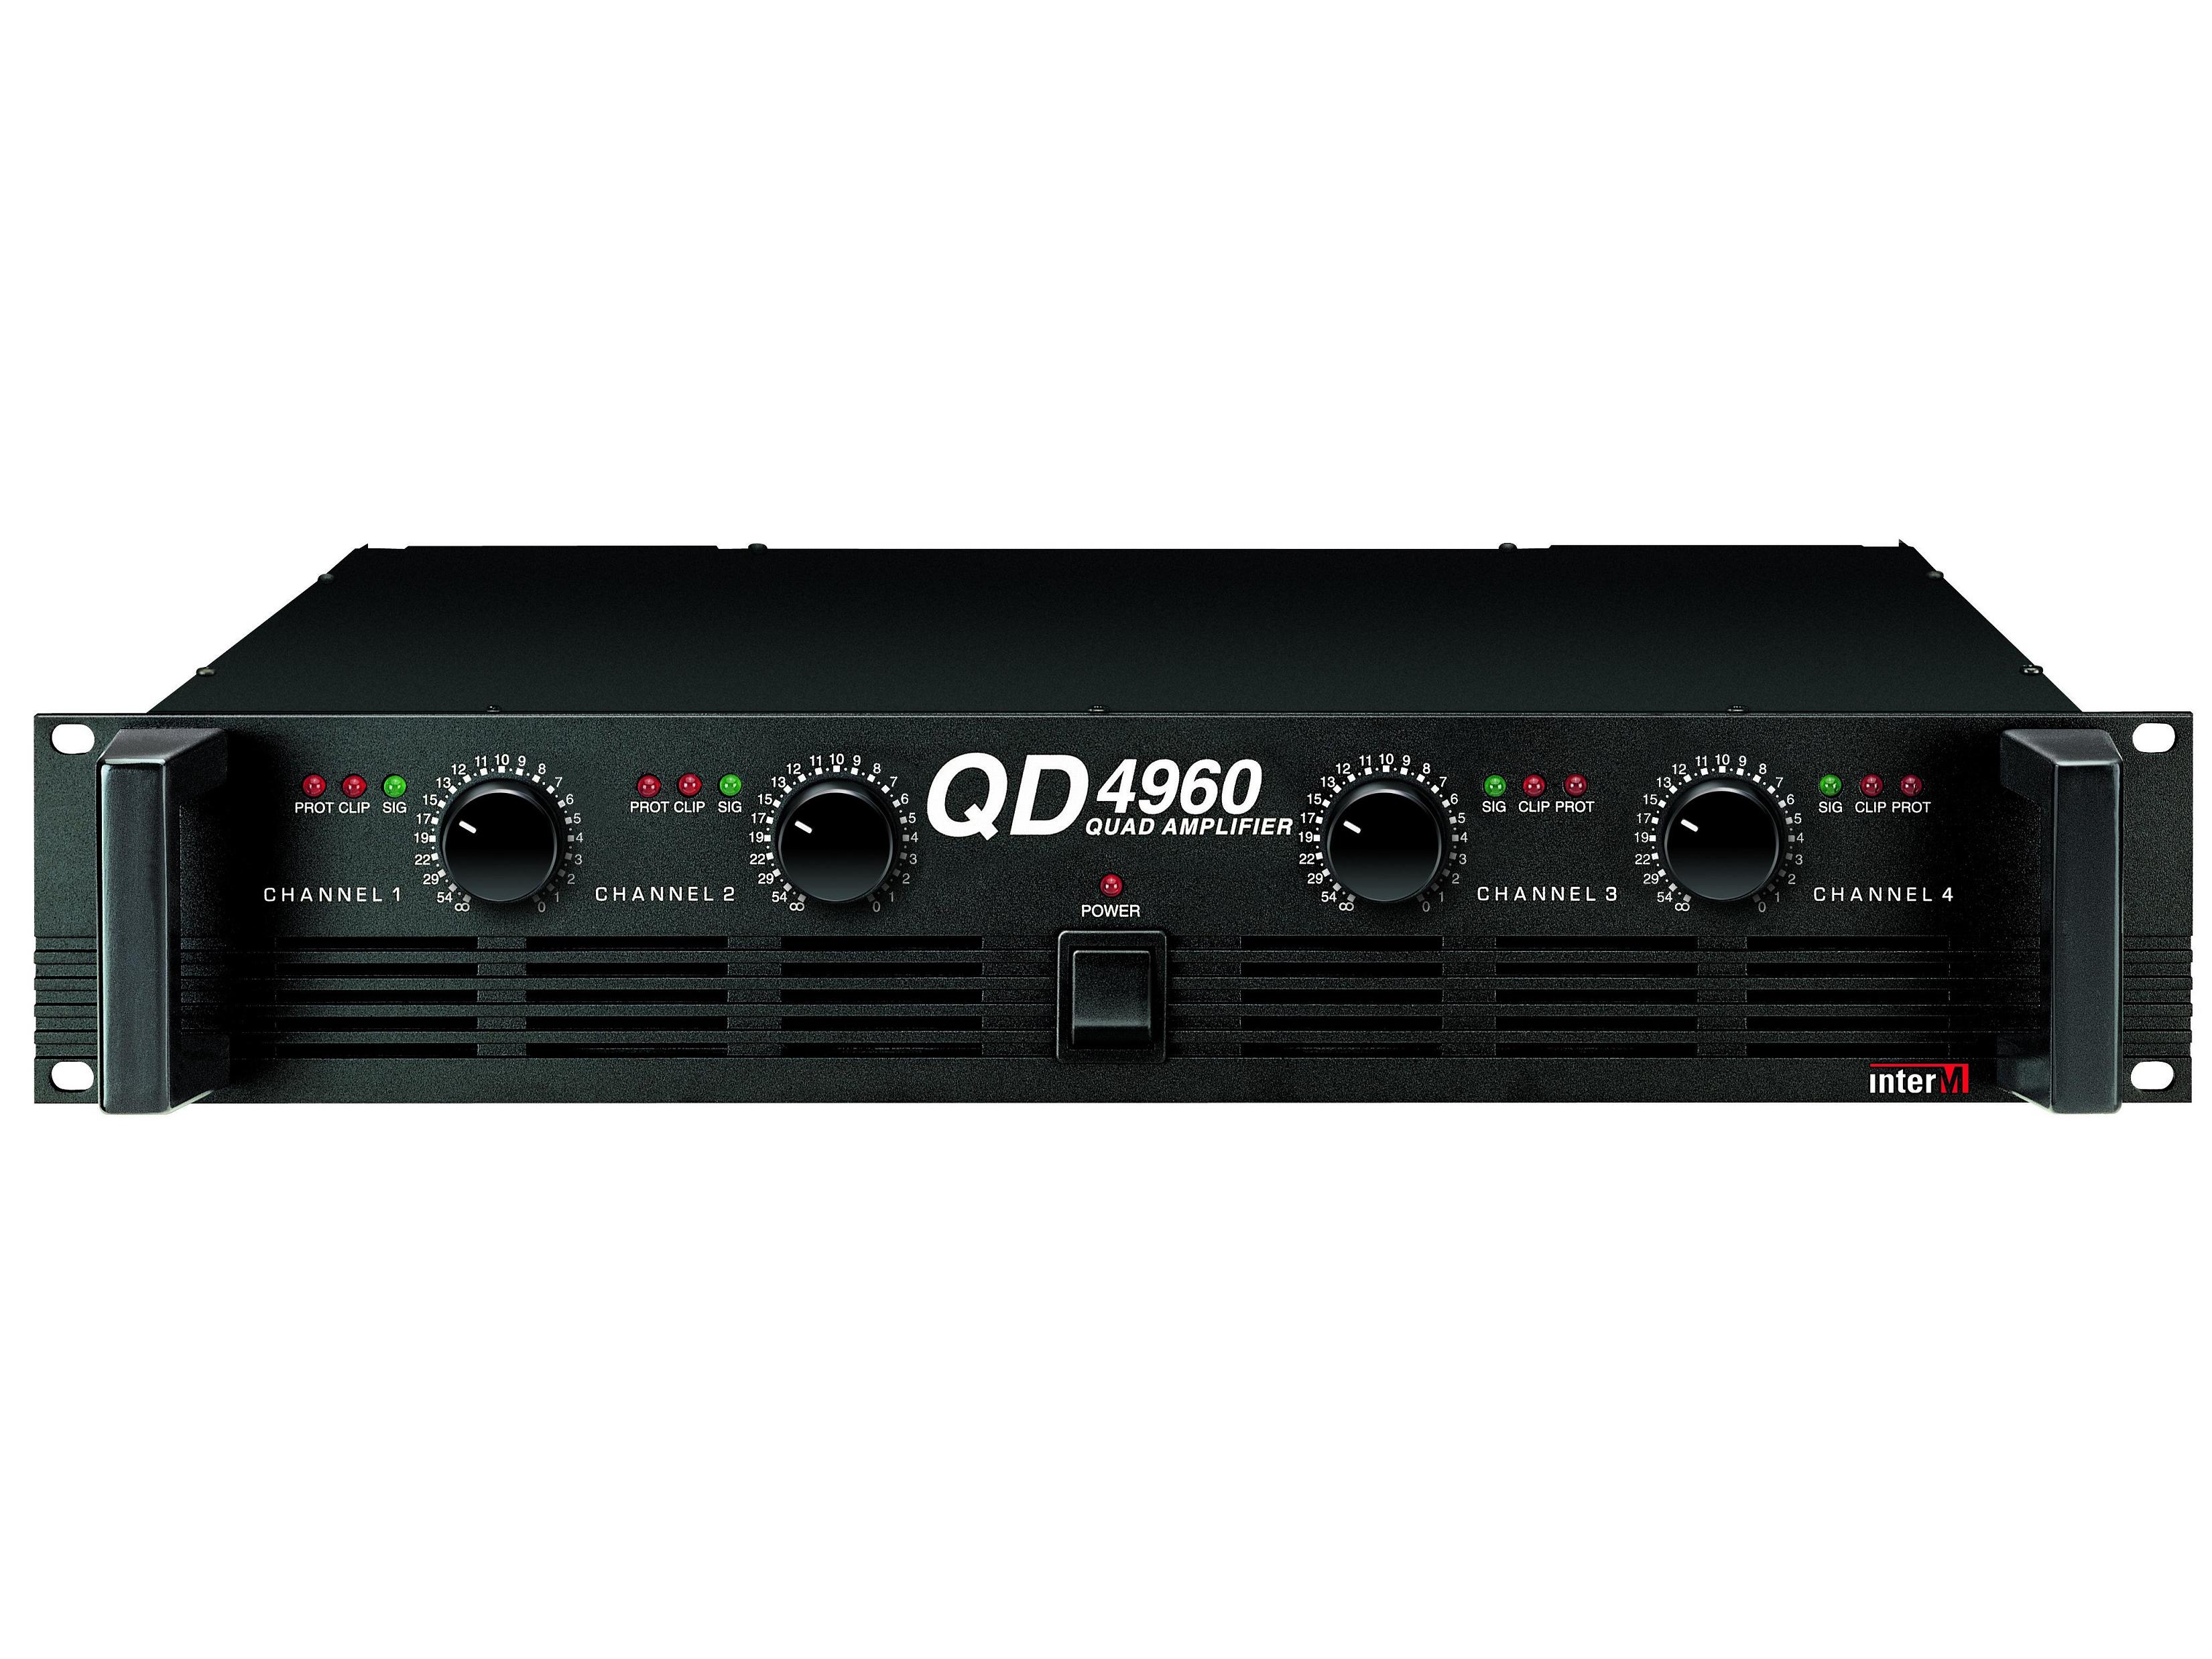 QD-4960 4 Channel QD-Series Professional Power Amplifier 170W (8 Ohm) by Inter-M